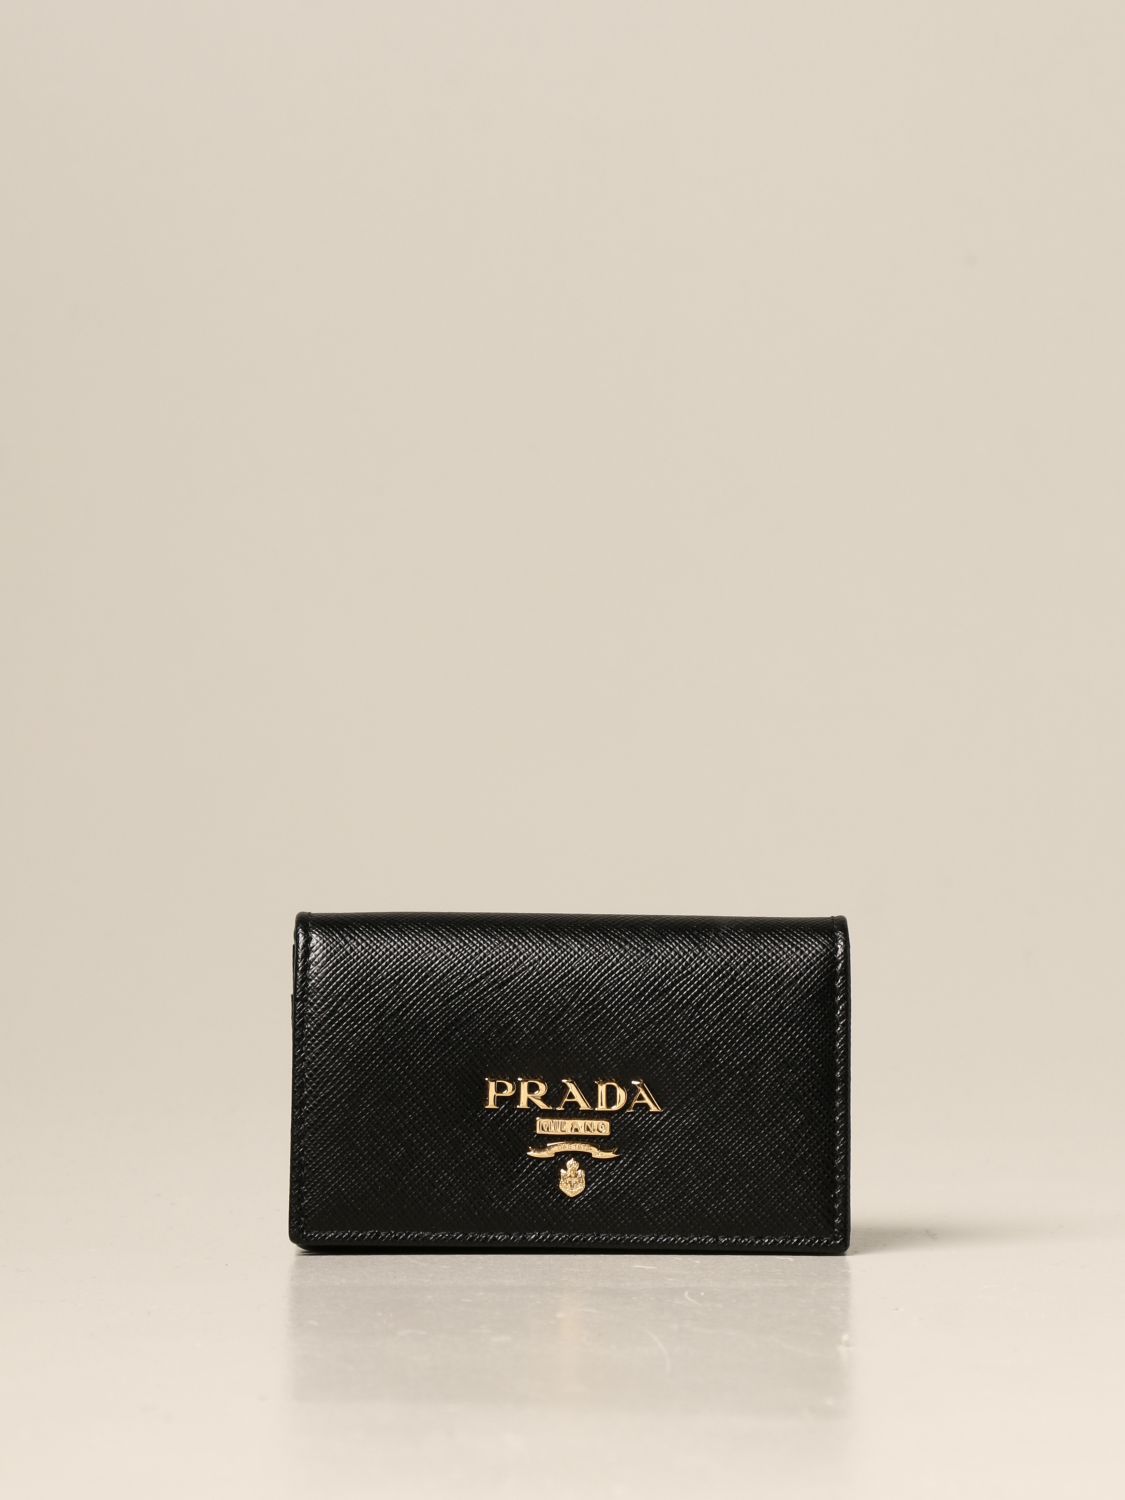 Prada Card Holder Saffiano Leather Black in Calfskin - US